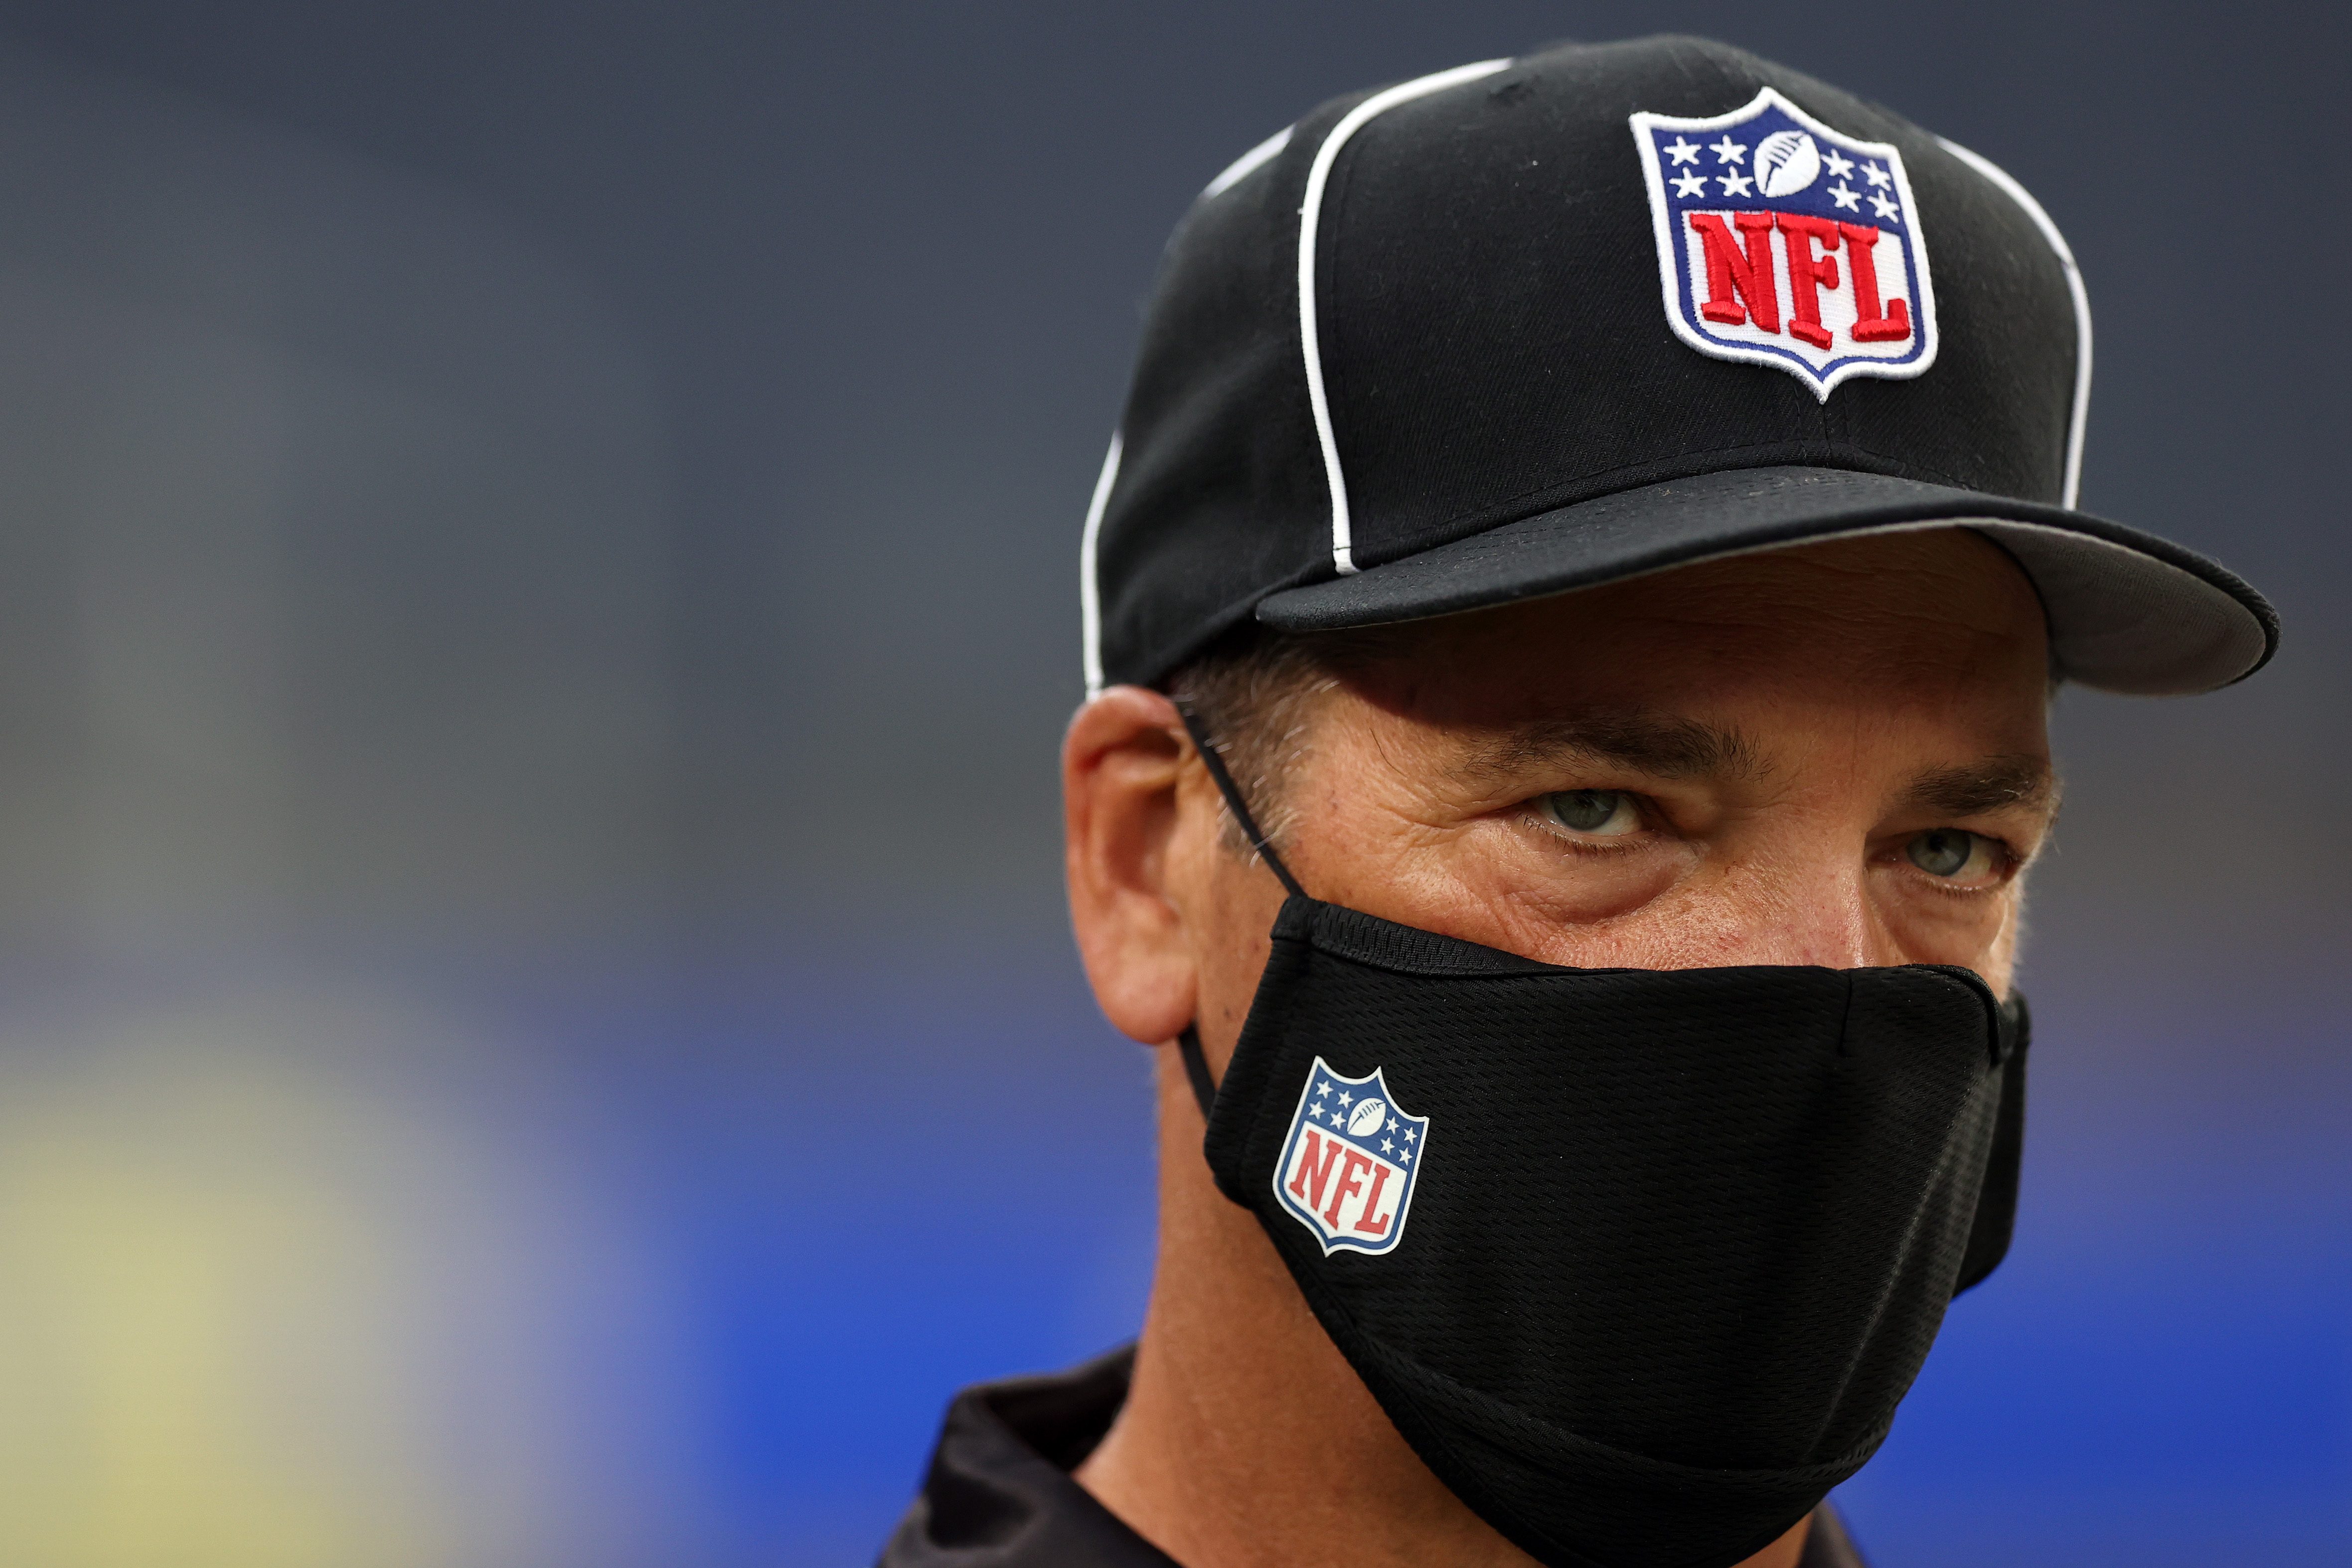 NFL side judge David Meslow wears a mask during a preseason NFL game